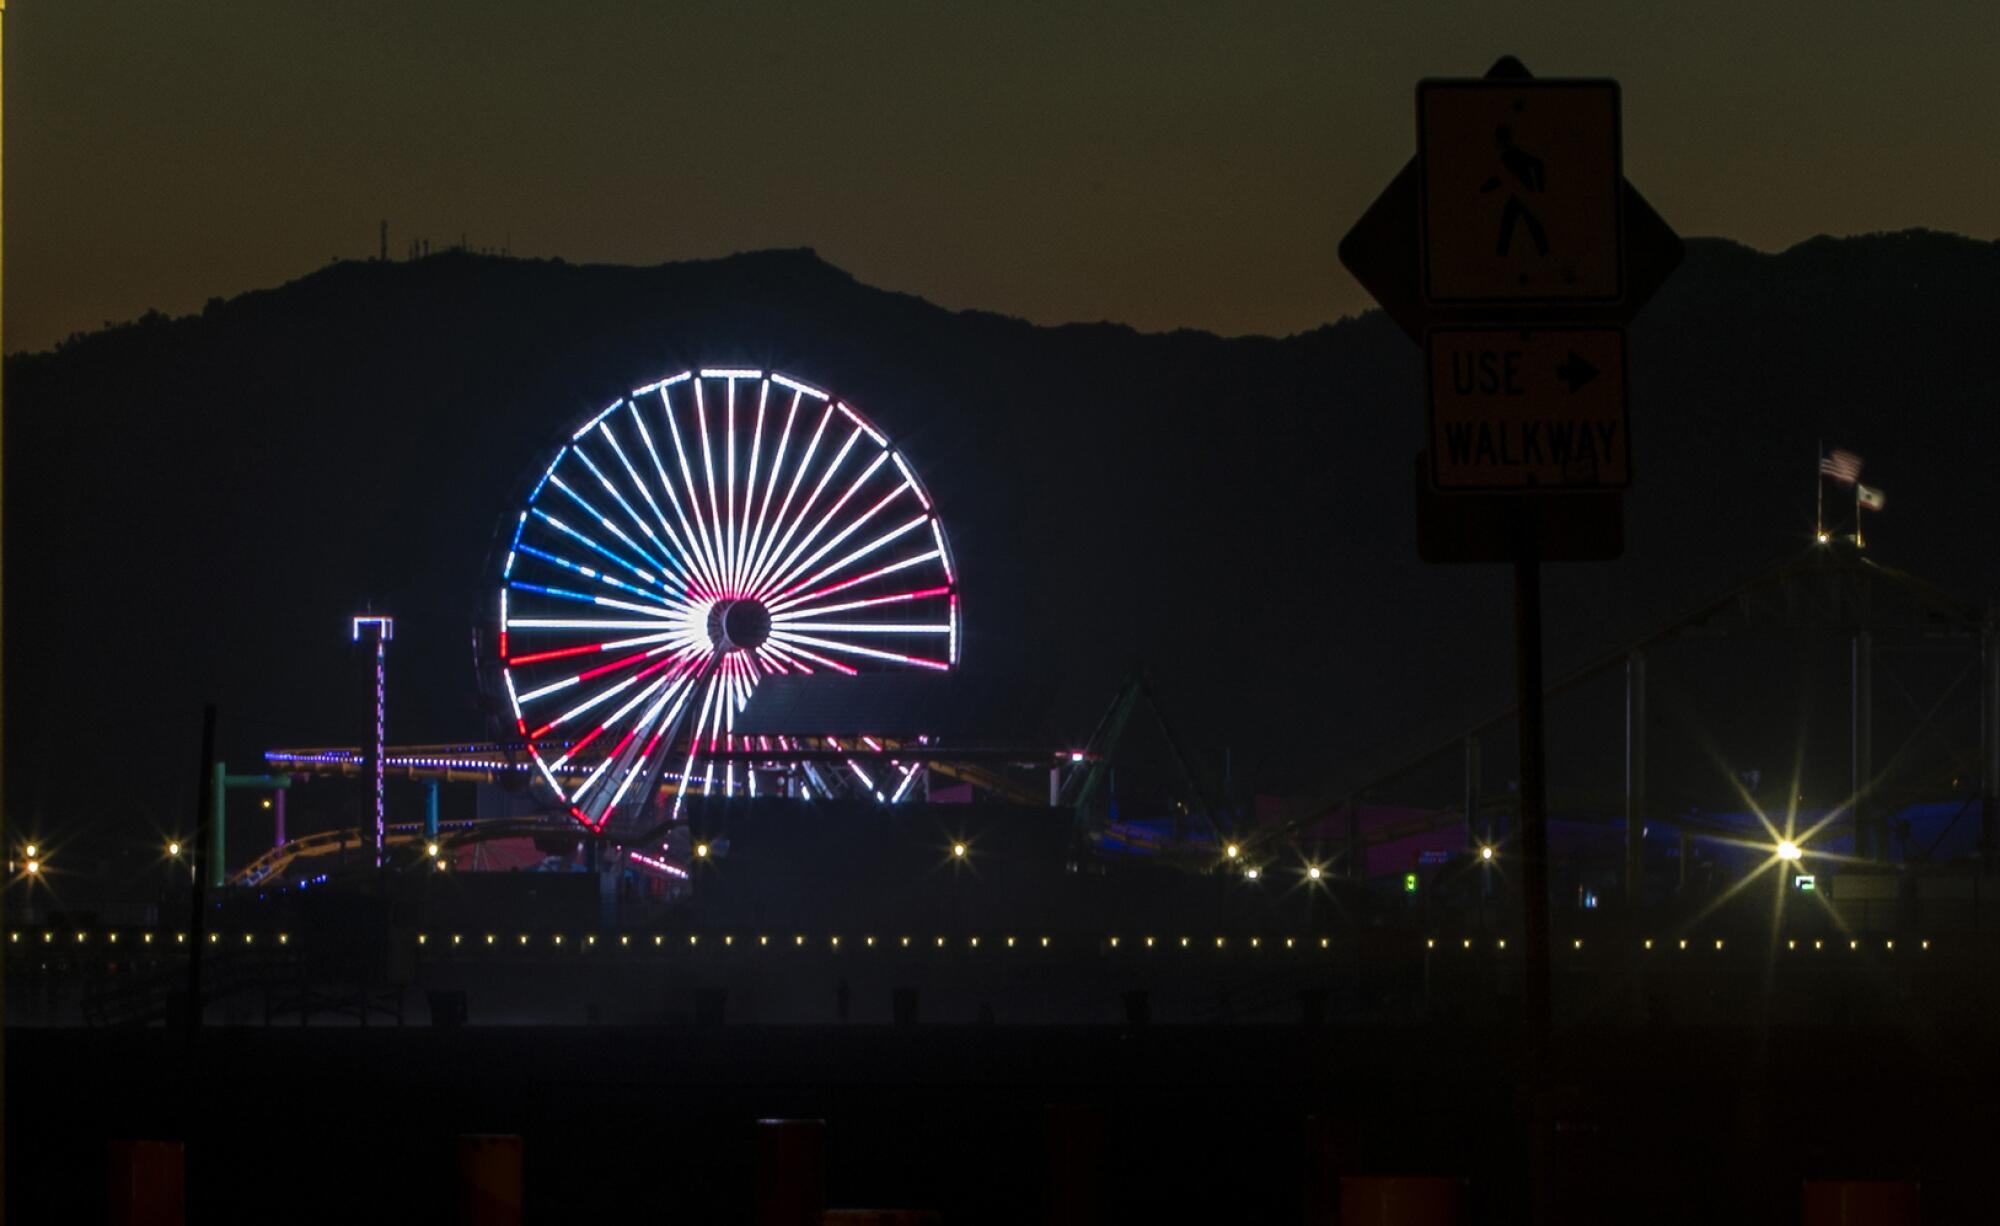 The Ferris wheel is lit in patriotic colors on July 4th weekend at the Santa Monica pier.